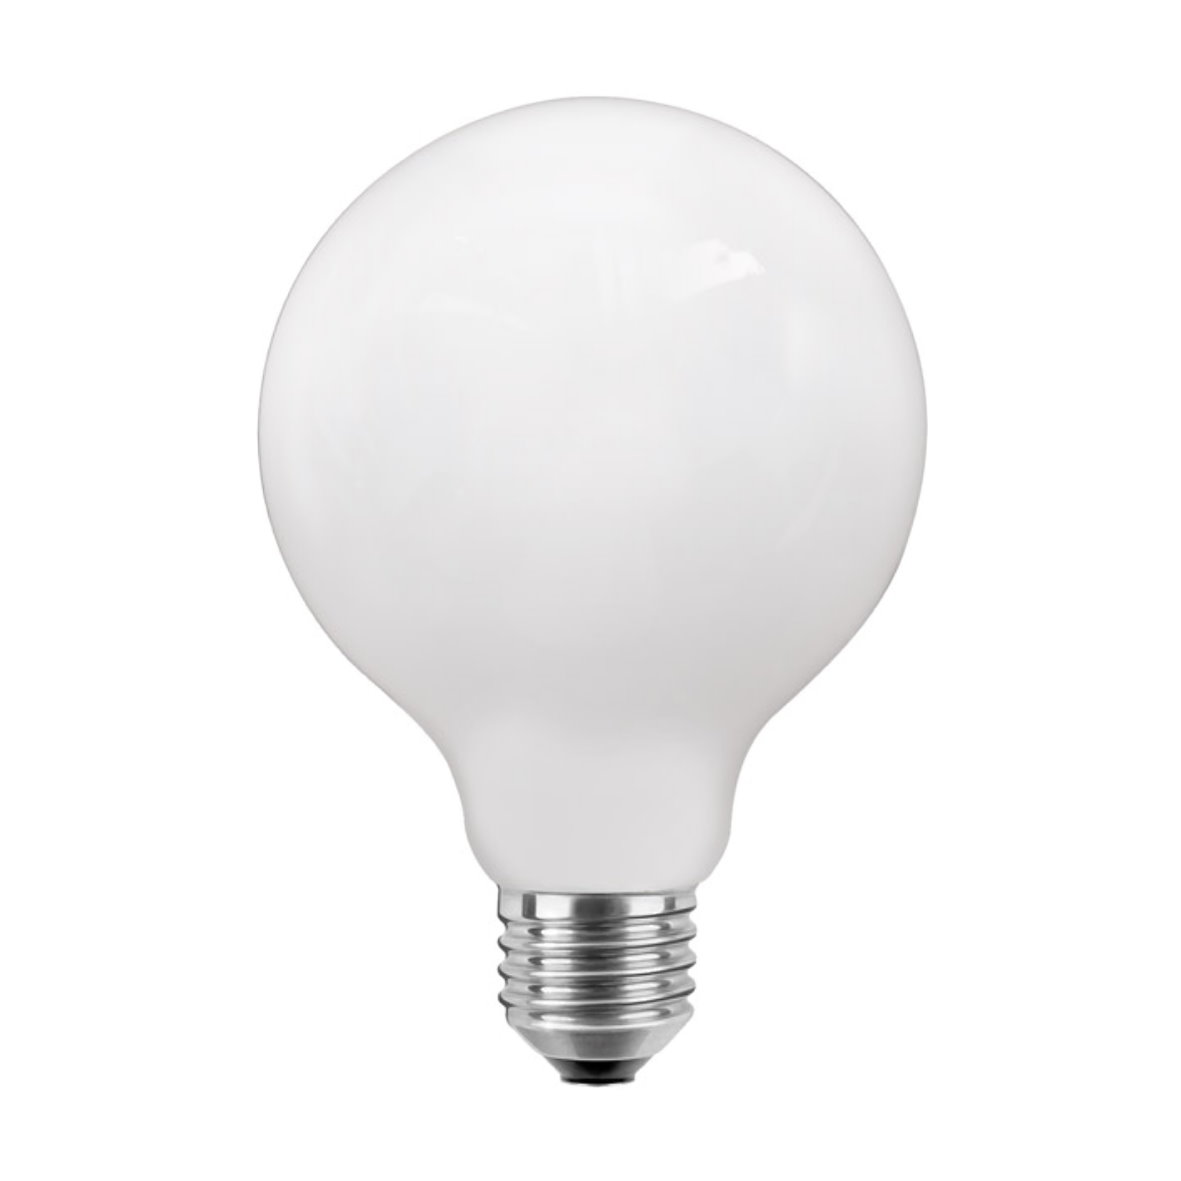 Segula smd LED tête rond e14 e27 ampoules Dimmable variateur Lampe